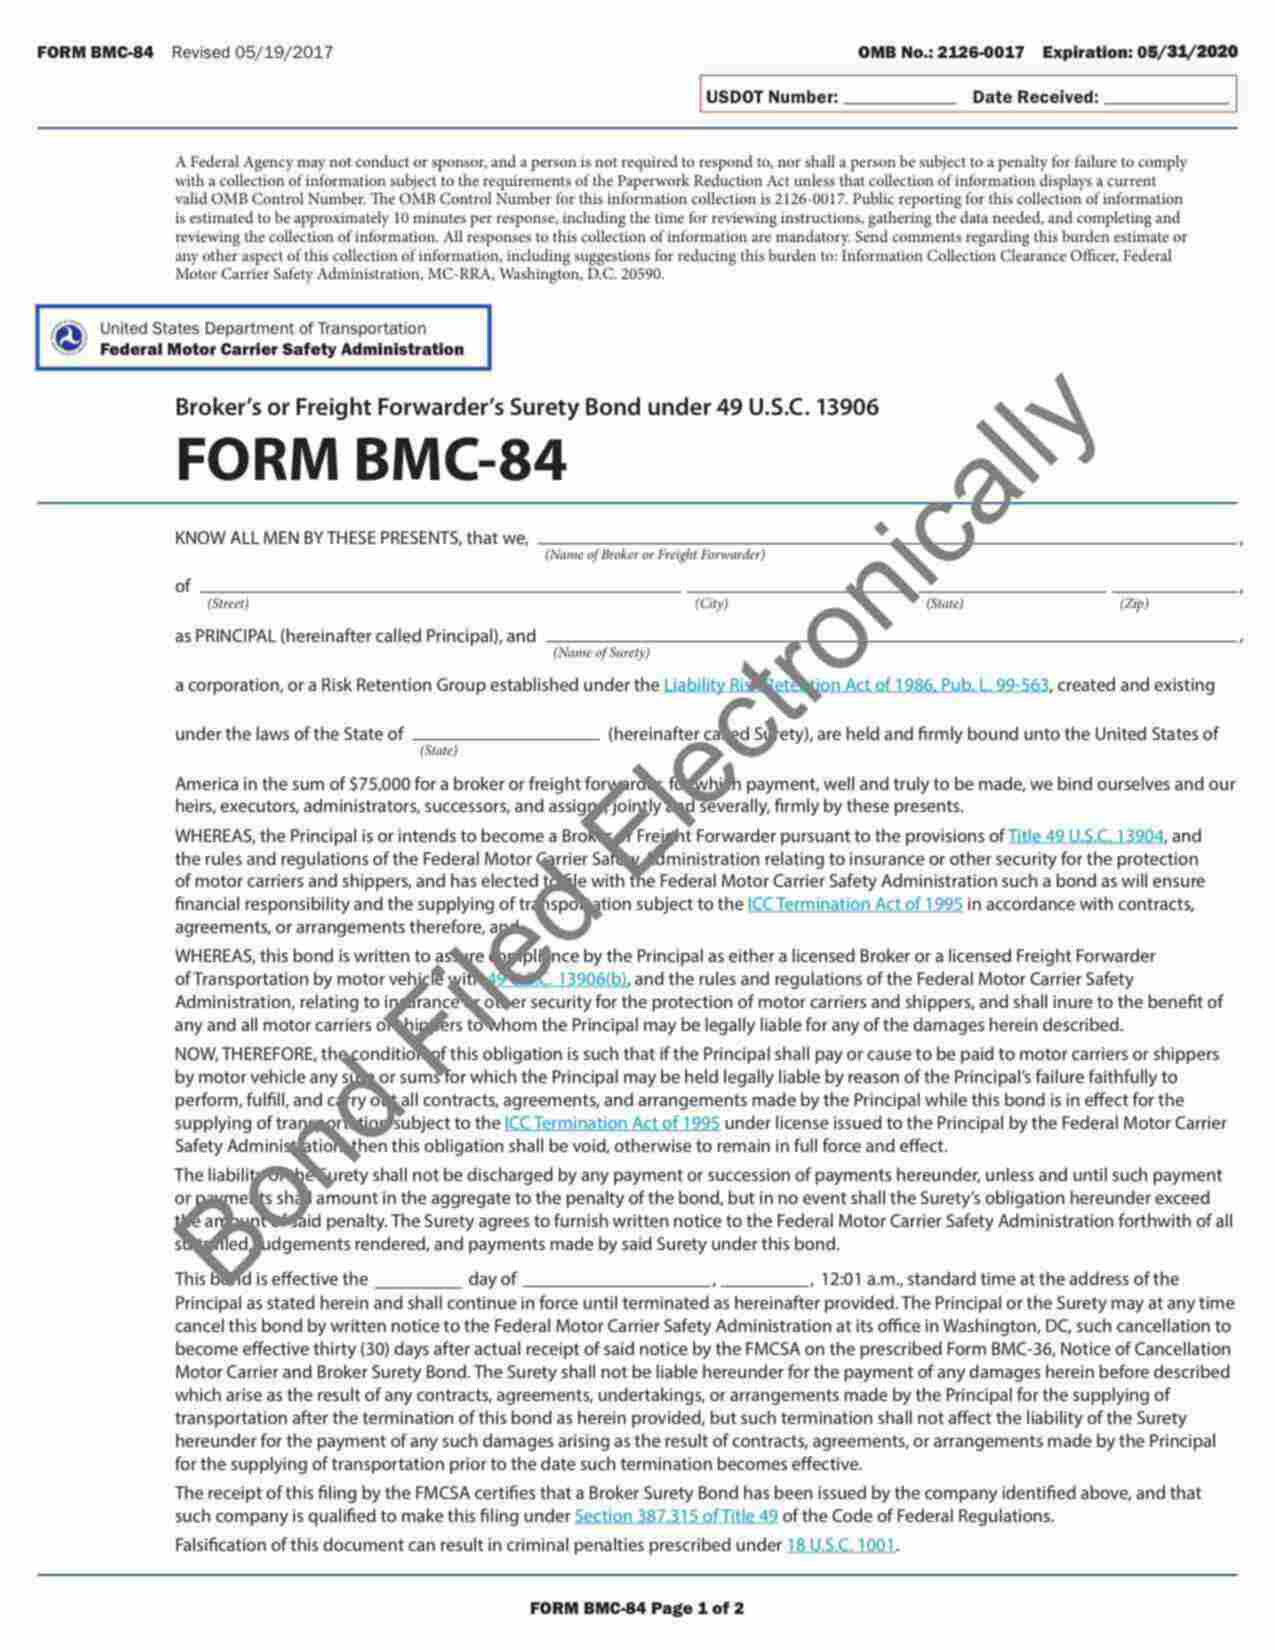 Tennessee Property Broker or Freight Forwarder BMC-84 (ICC Broker) Bond Form